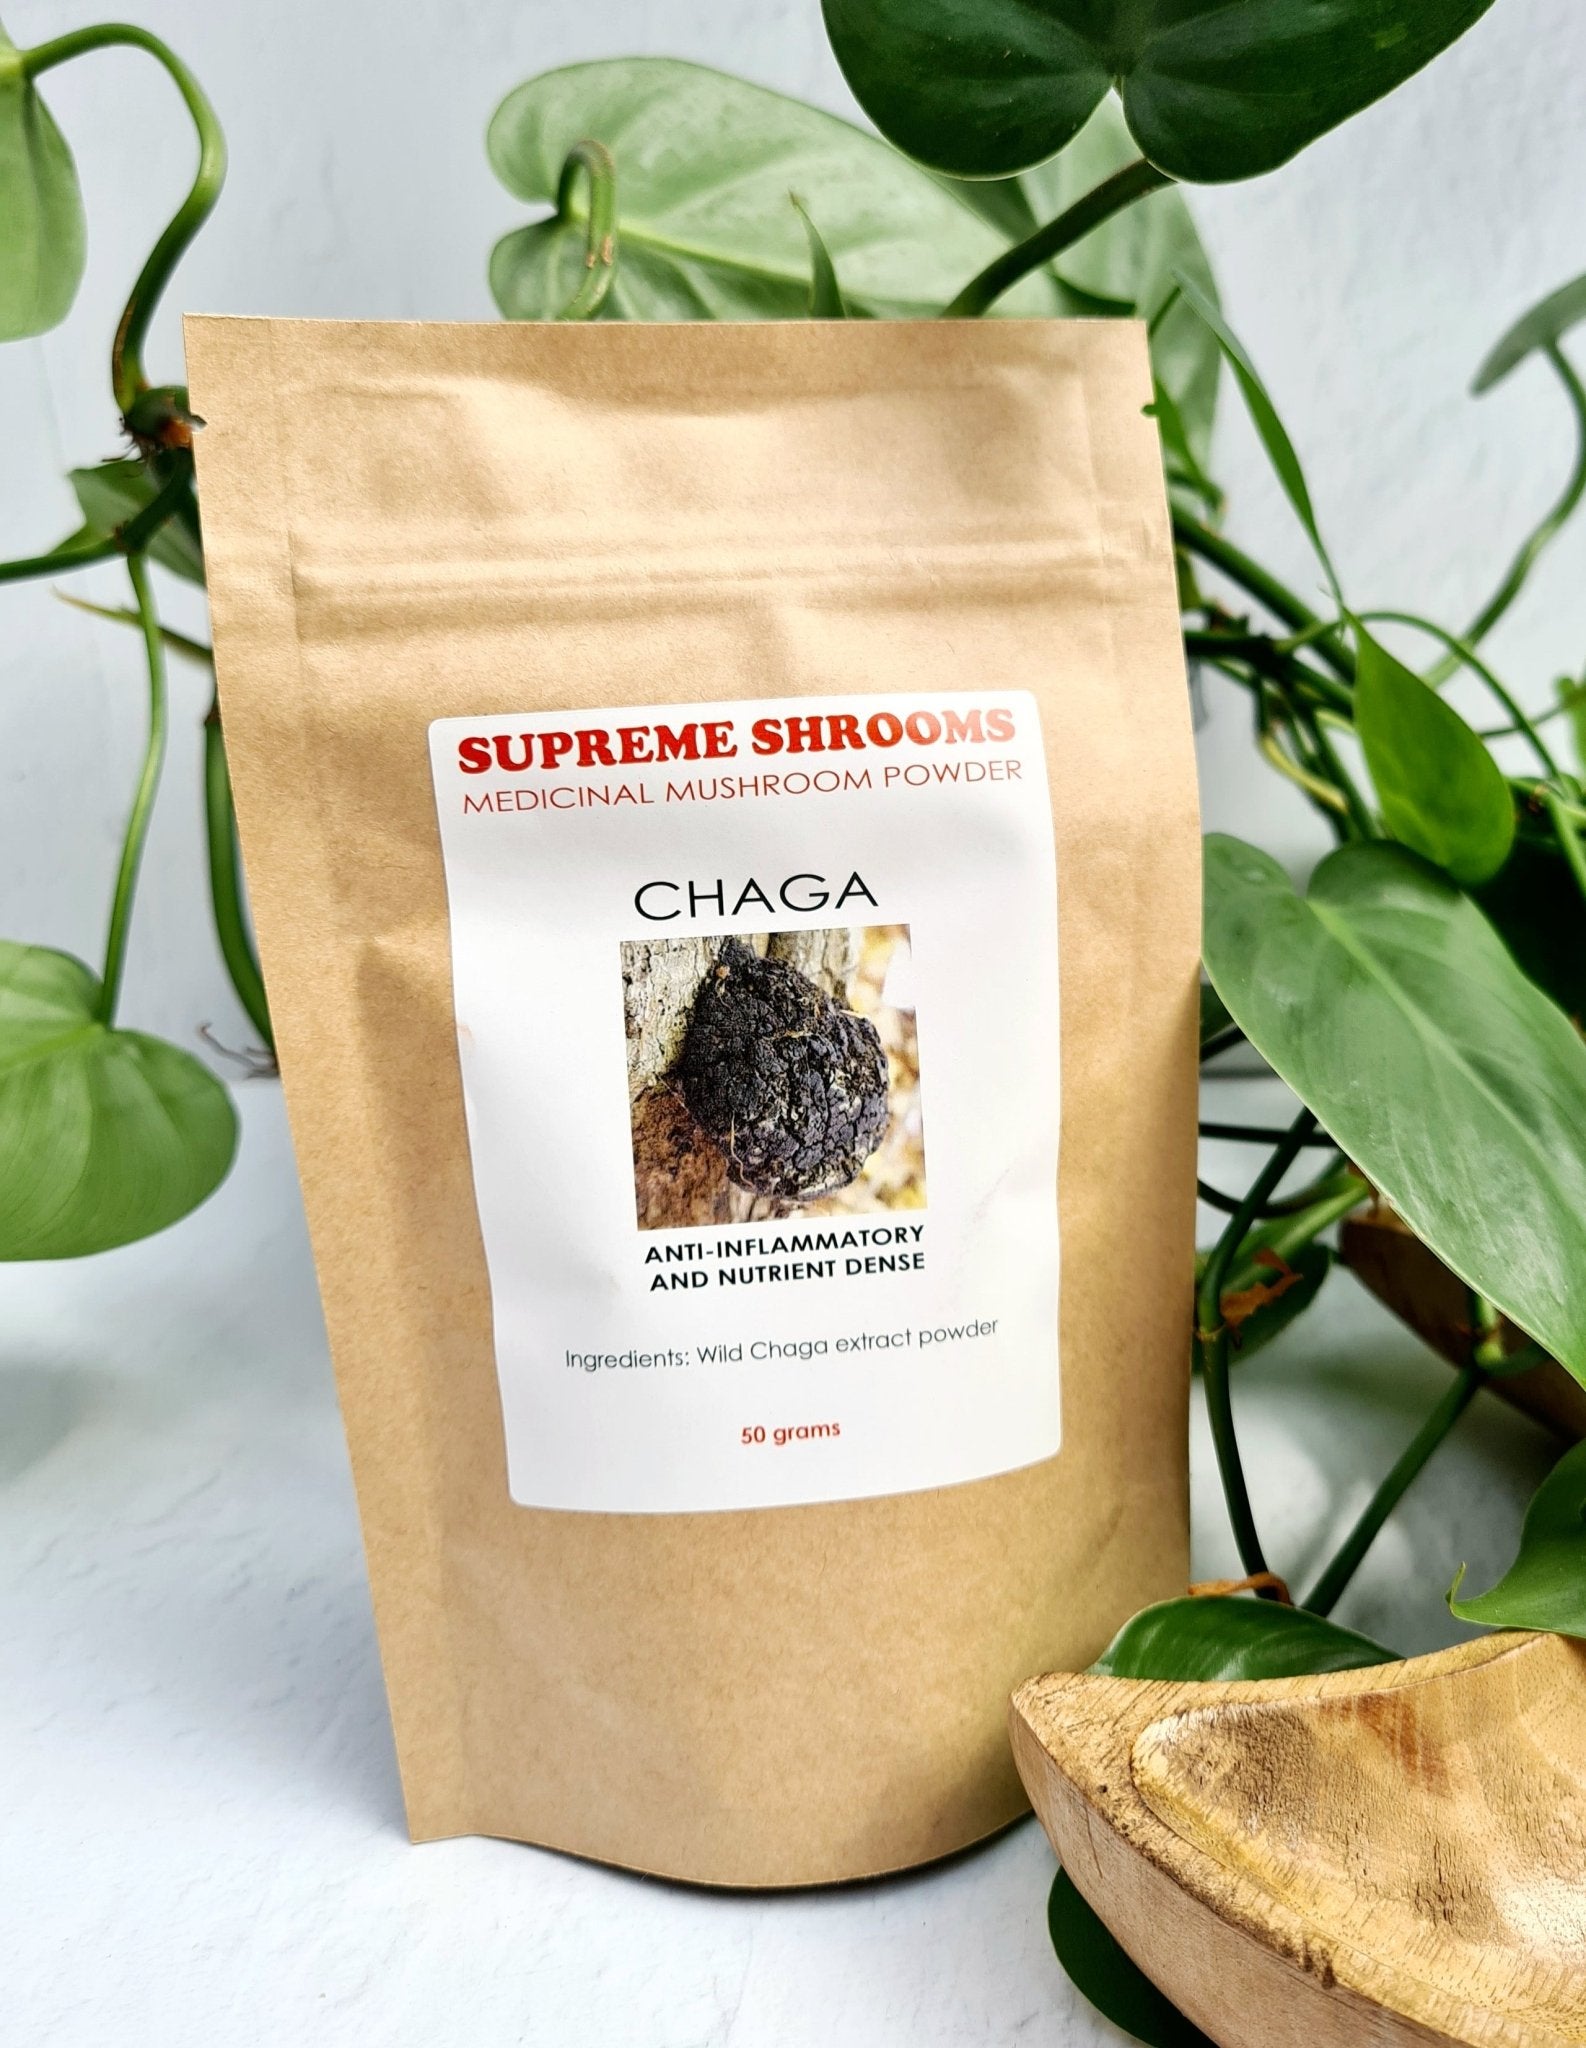 Chaga Medicinal Mushroom Powder - 50g $36.00 - #shop_name - -Supreme Shrooms